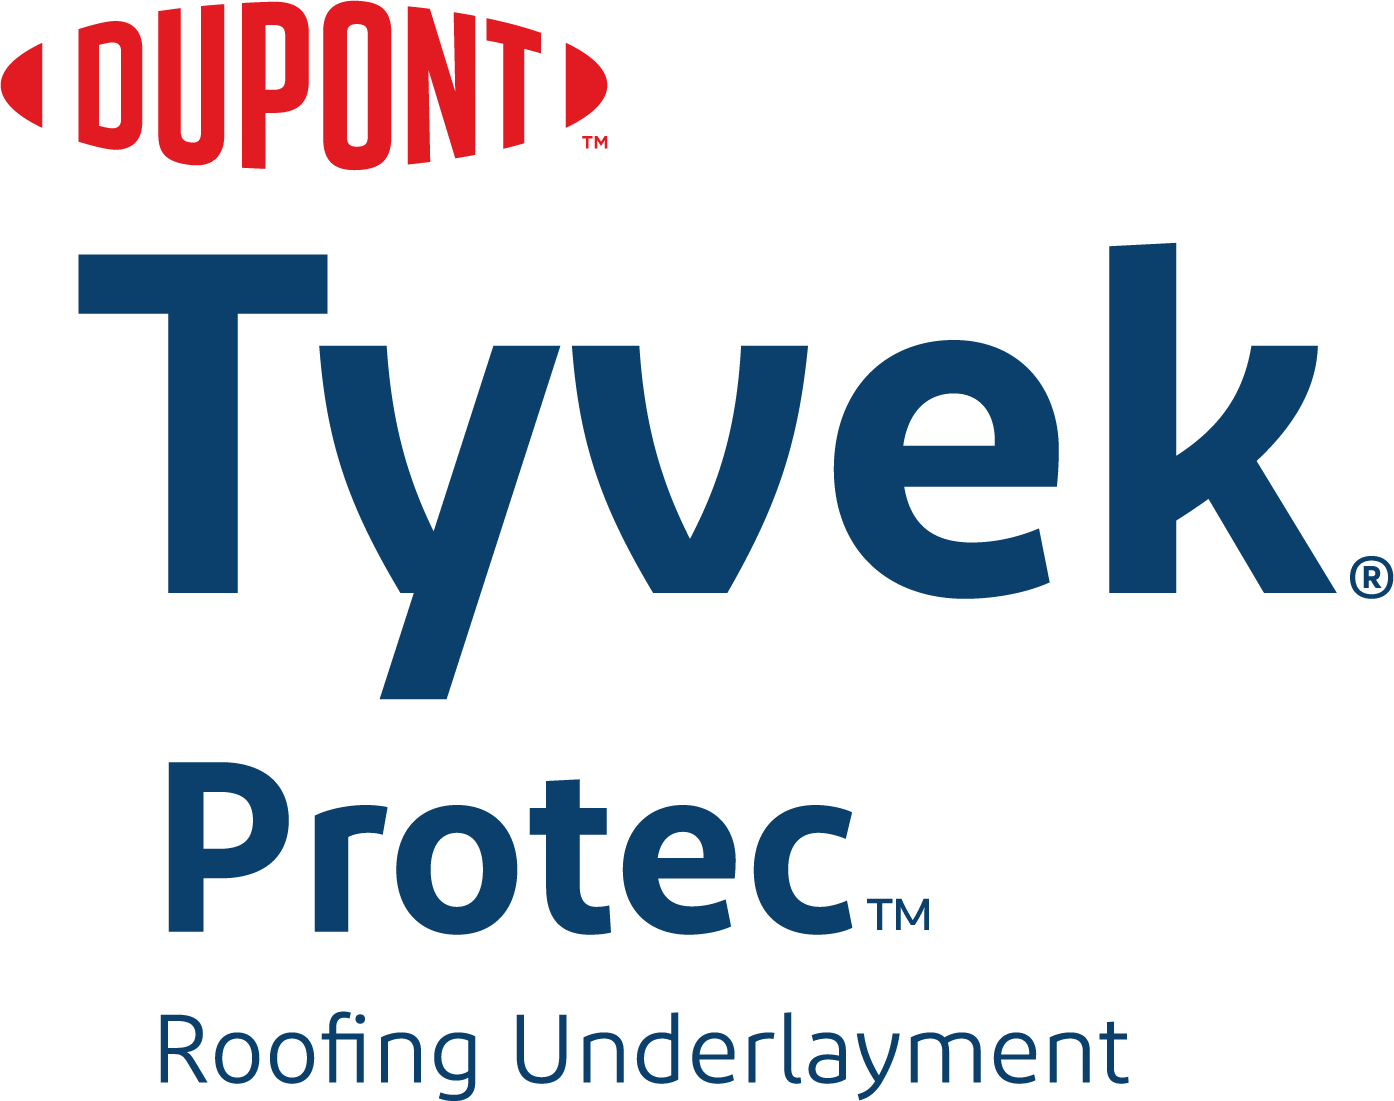 dupont-tyvek-protec-directory-logo